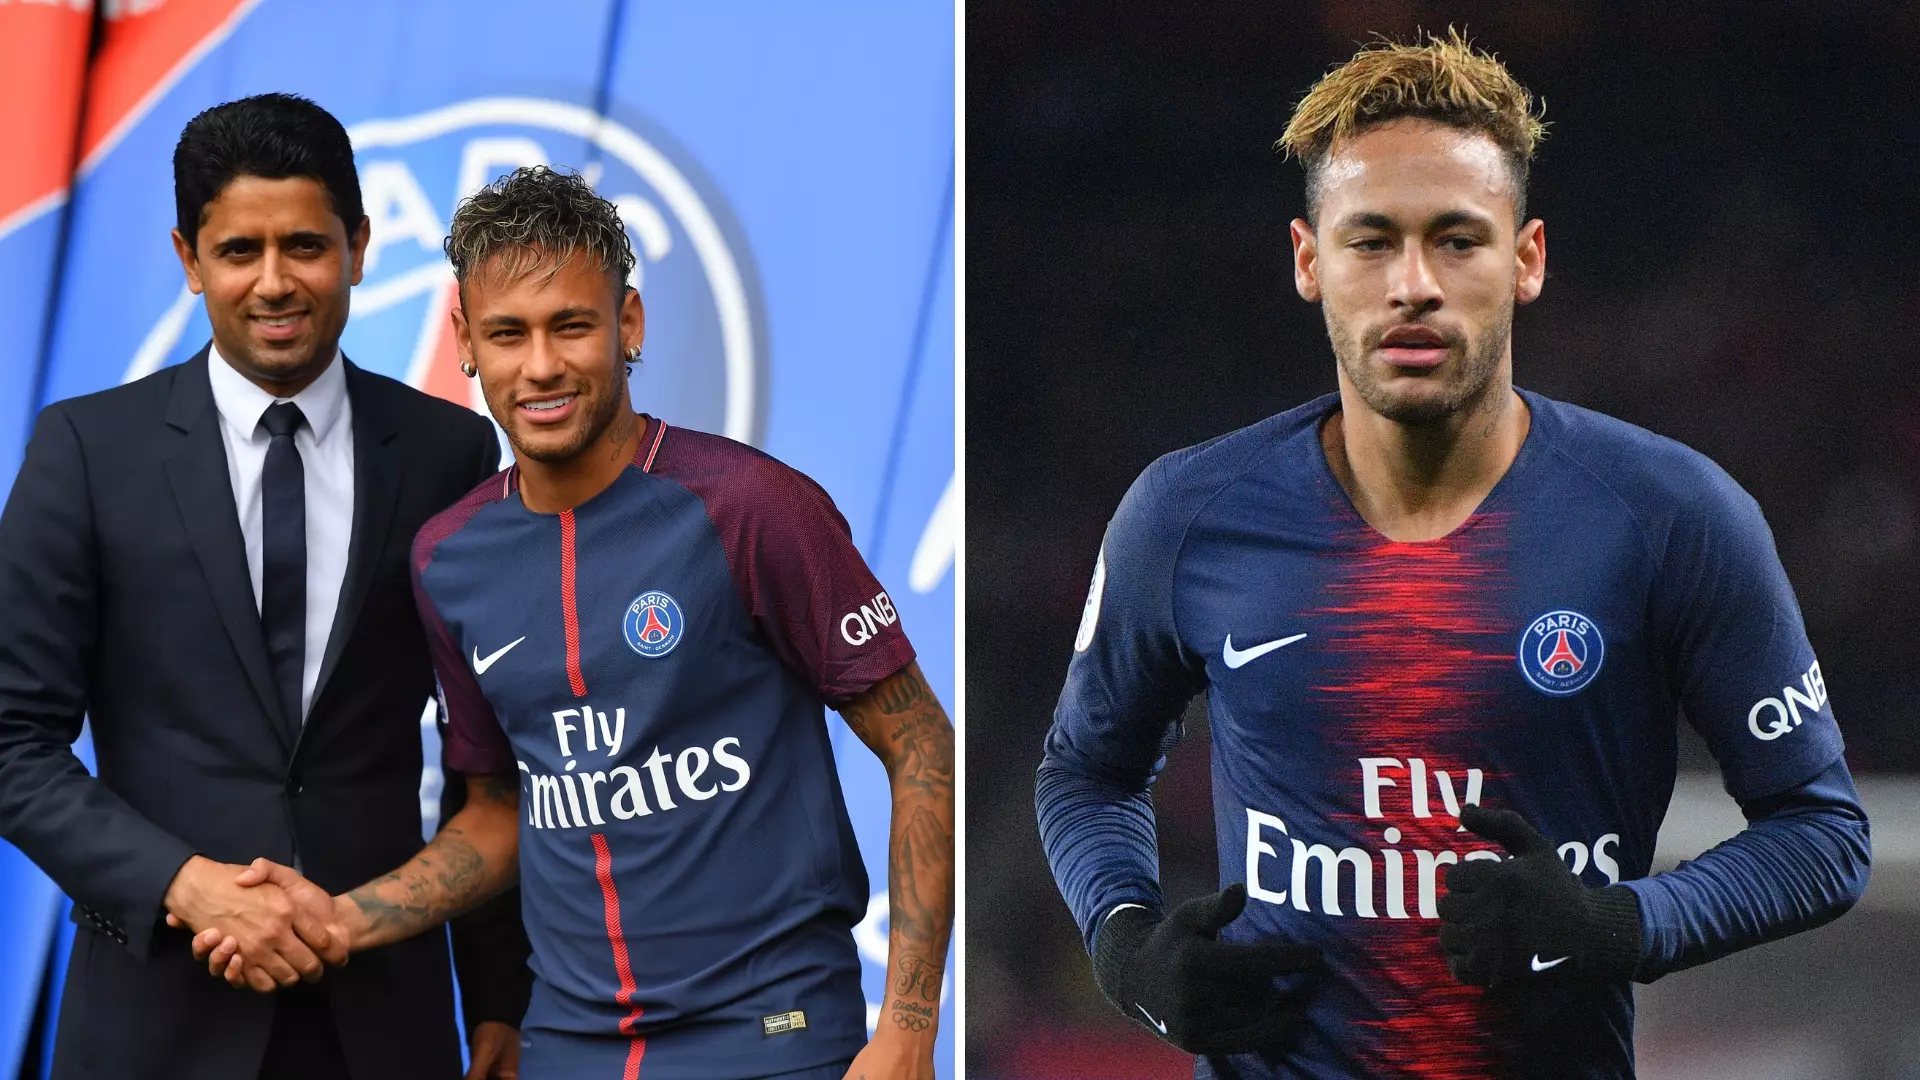 Neymar Reaches €200m Exit Deal With Paris Saint-Germain Next Summer